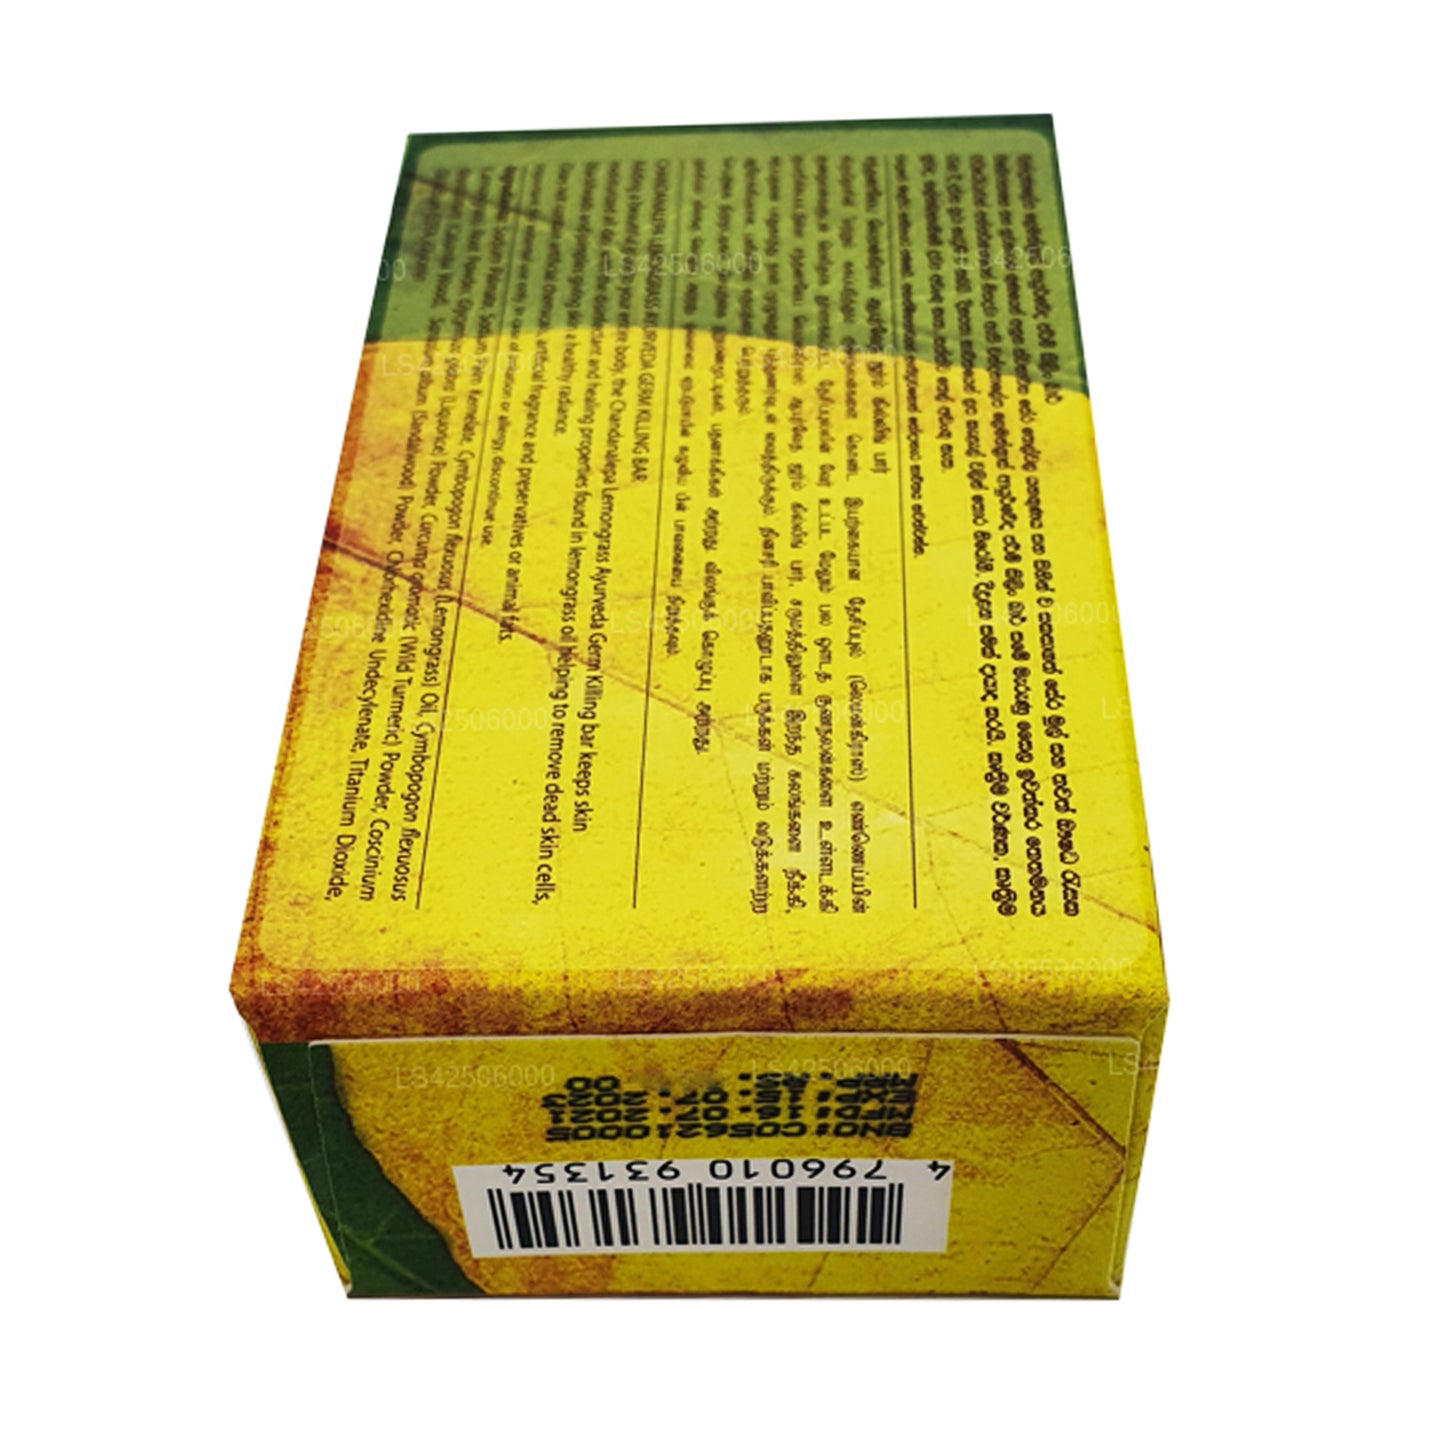 Chandanalepa Zitronengras-Ayurveda-Keimtötende Seife (100 g)